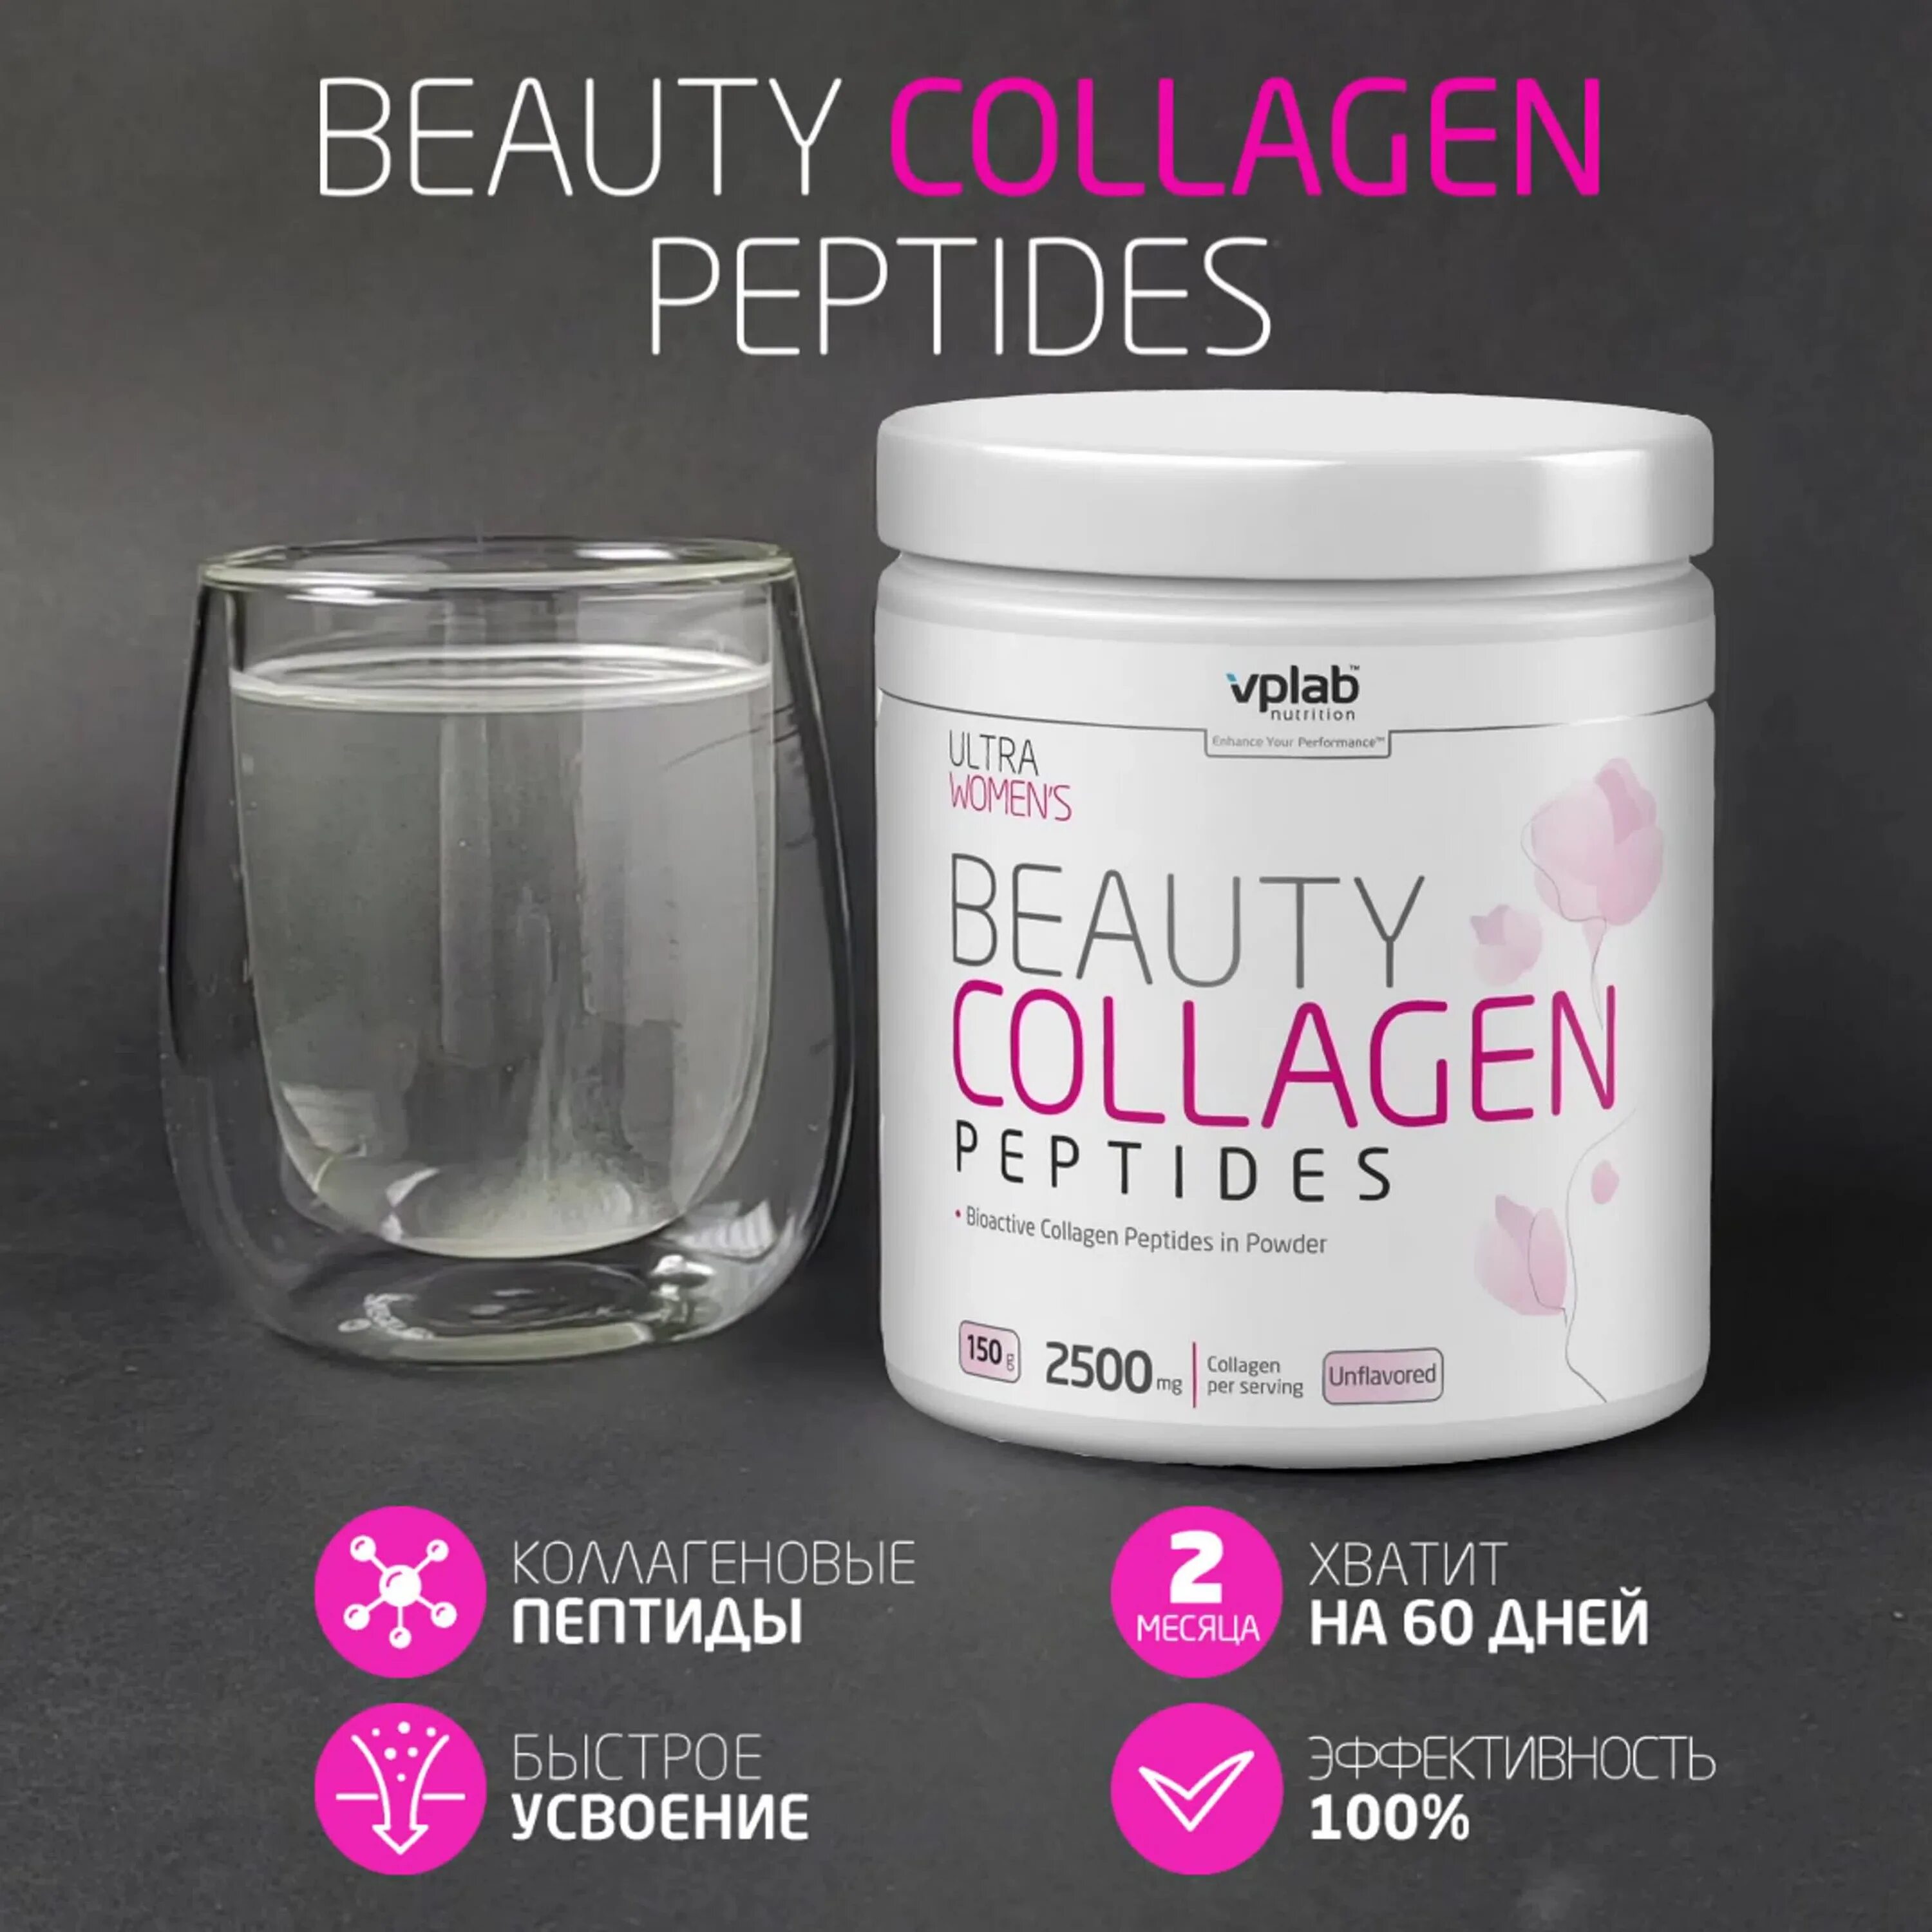 Vplab коллаген. Коллаген VPLAB Collagen Peptides. Бьюти коллаген пептид VPLAB. Коллаген VPLAB Nutrition Beauty Collagen Peptides. Коллаген пептид 430мл.